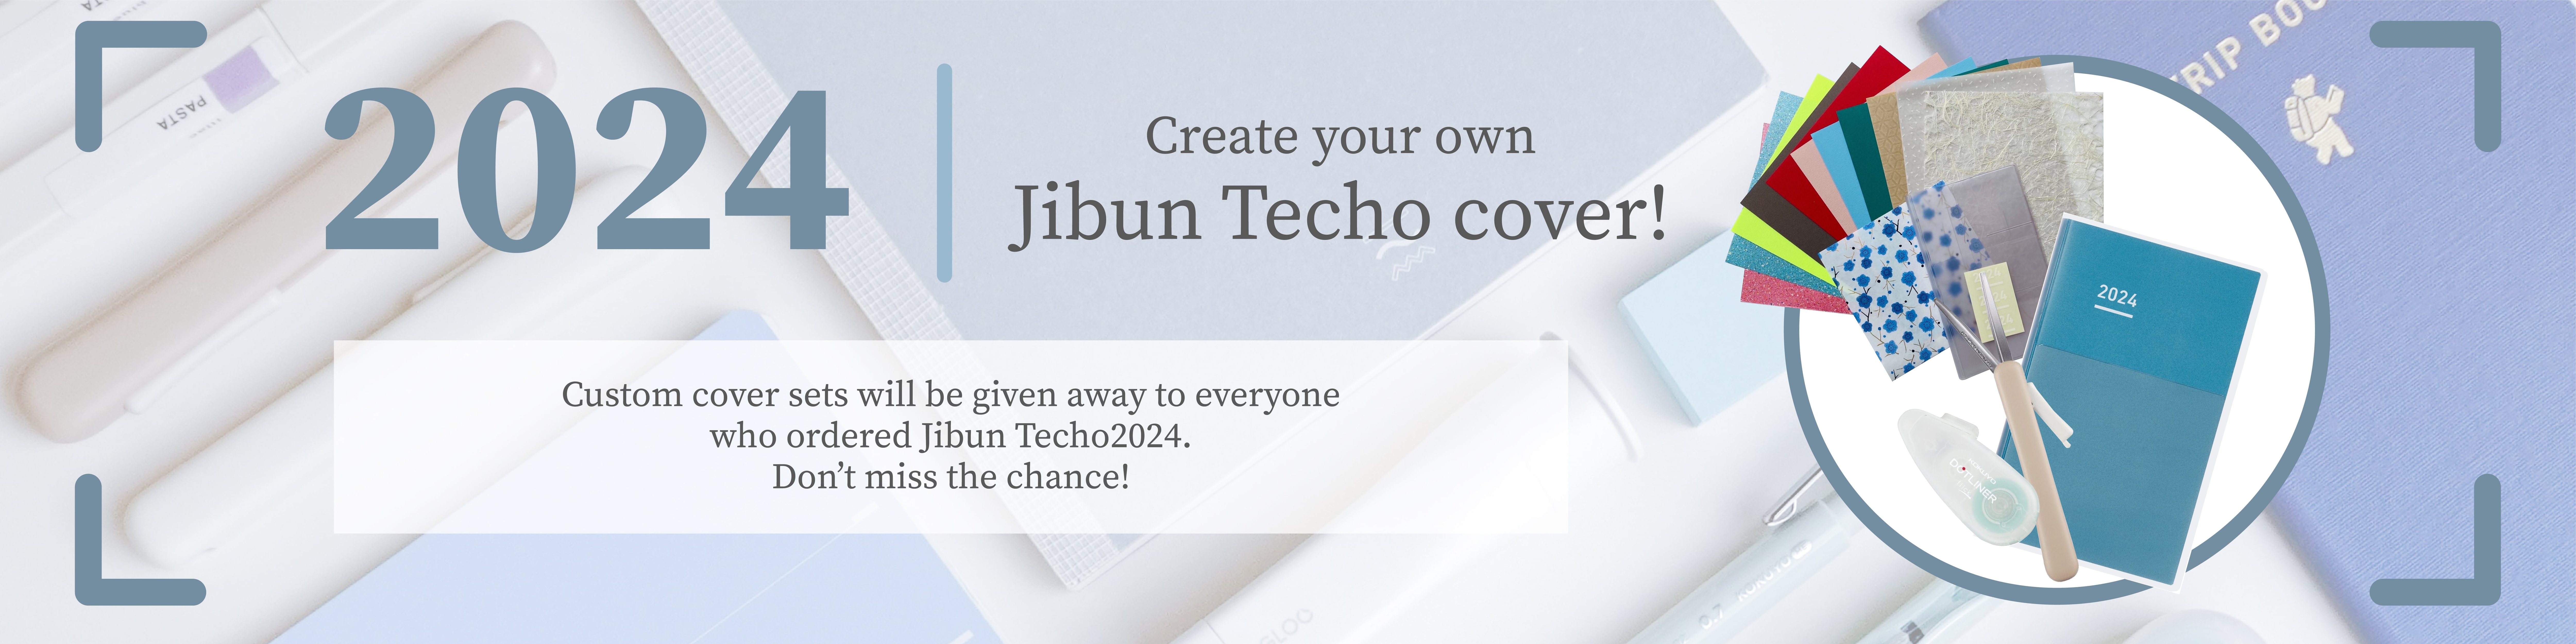 Jibun Techo Refill banner